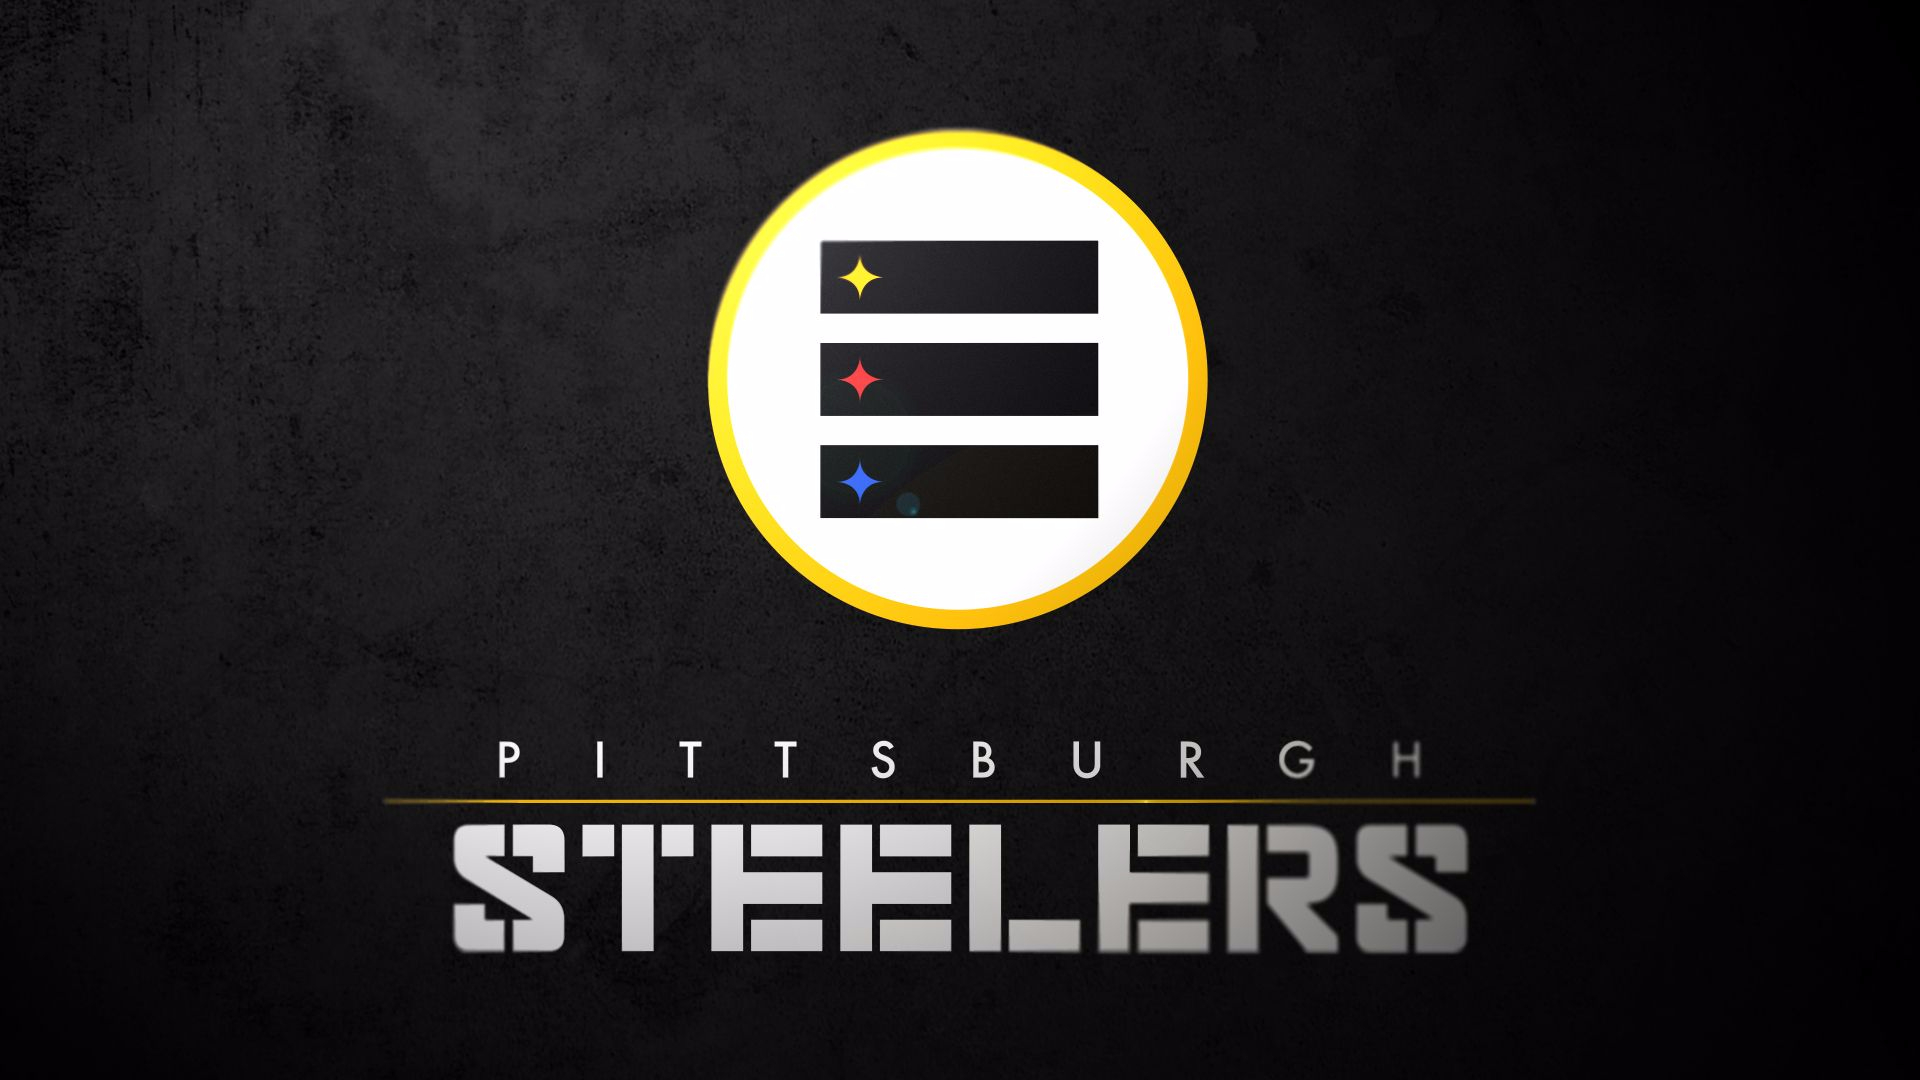 Pittsburgh Steelers Wallpaper Puter 7bx66r5 Jpg Picserio